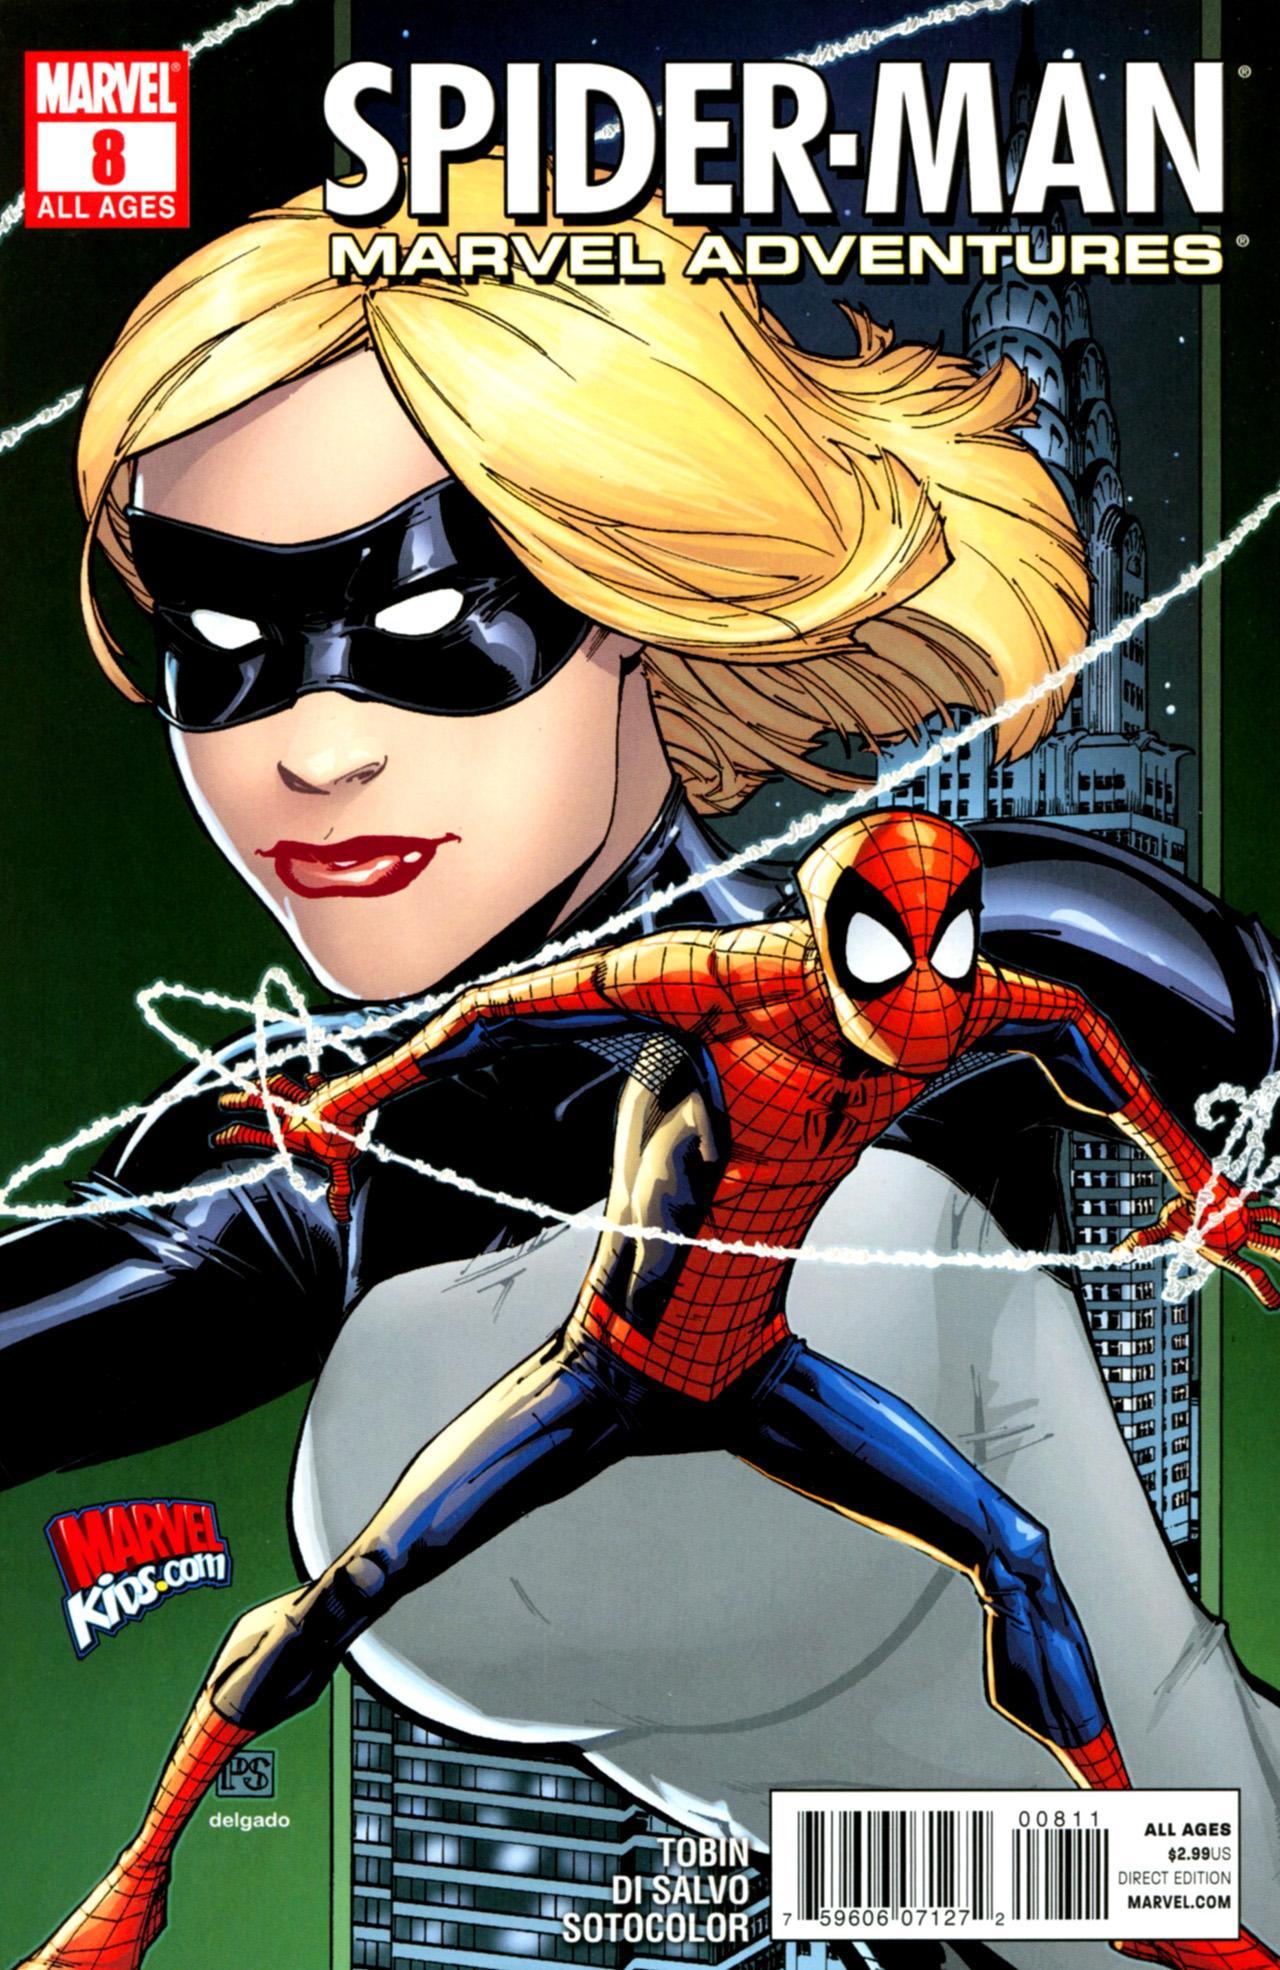 Marvel Adventures: Spider-Man Vol. 2 #8